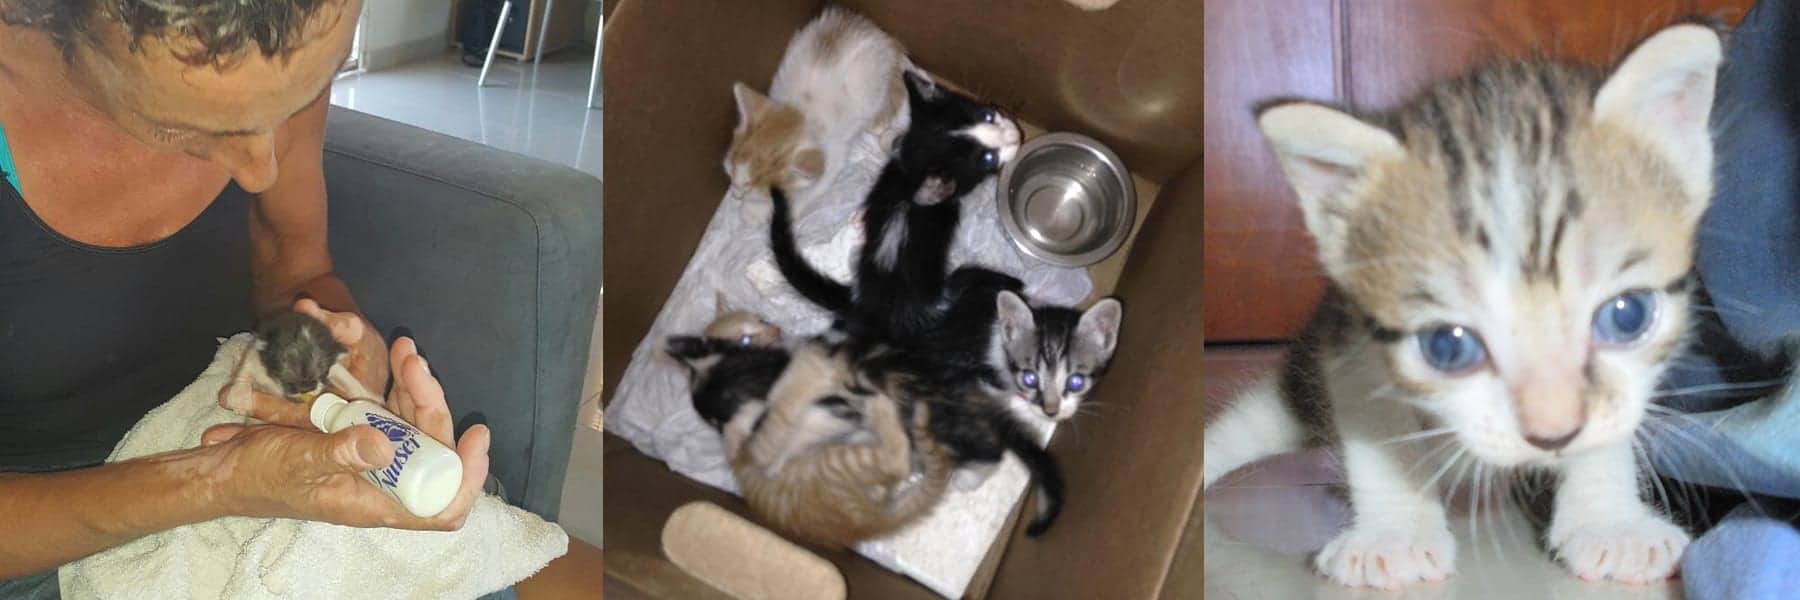 Bottle feeding - Kittens dumped in box - Kitten saved from drowning